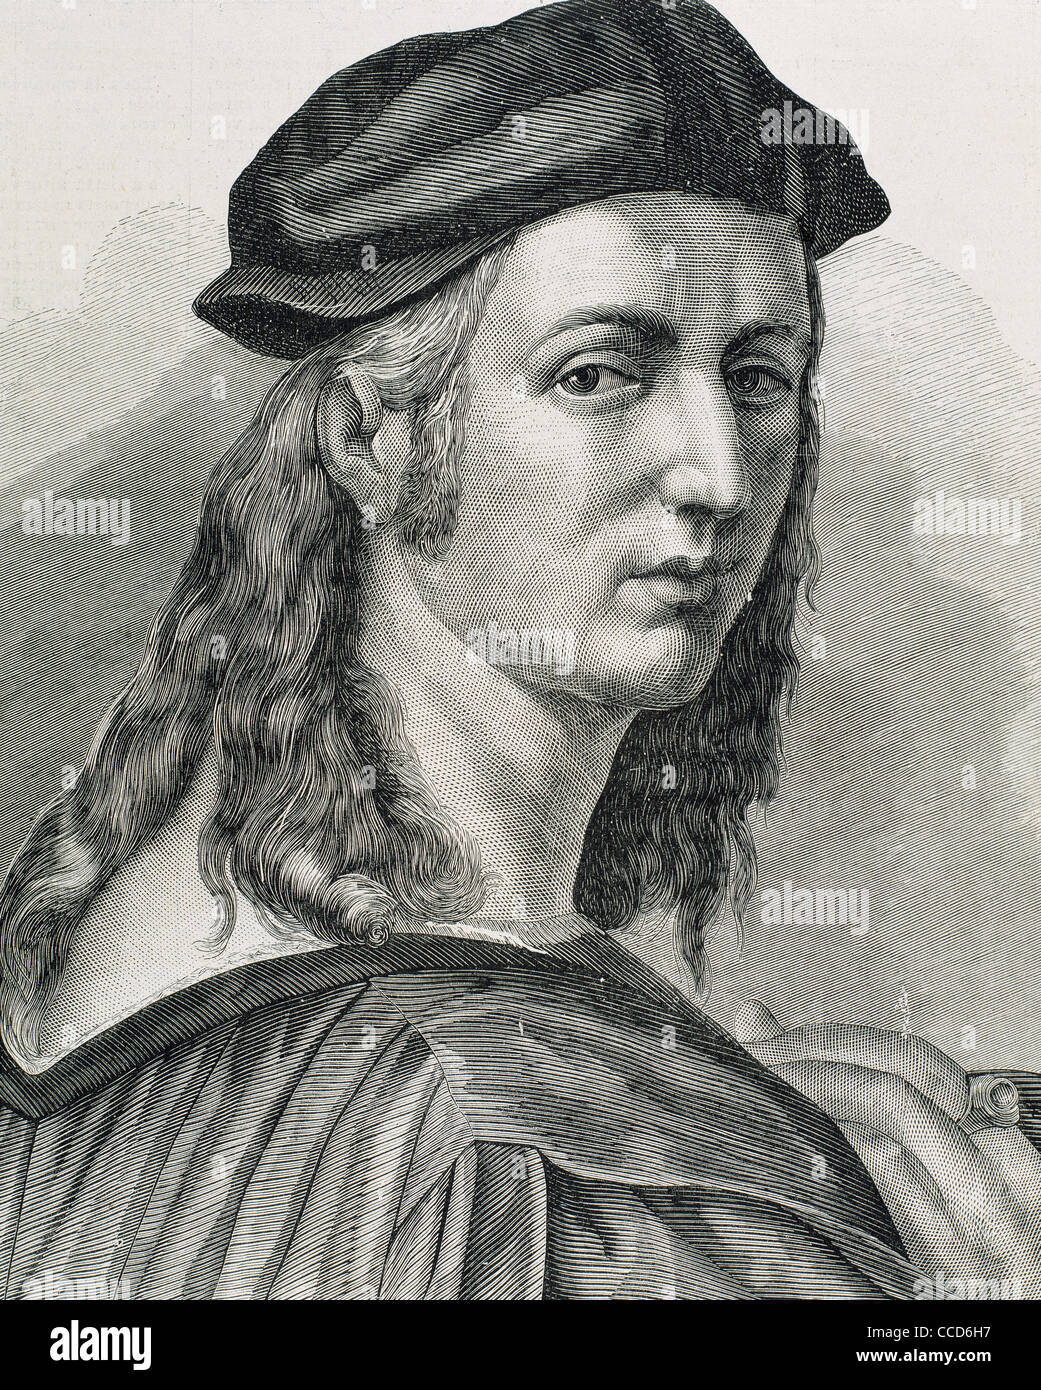 Raphael (1483-1520). Italian painter and architect of the High Renaissance. Portrait. Engraving. Stock Photo